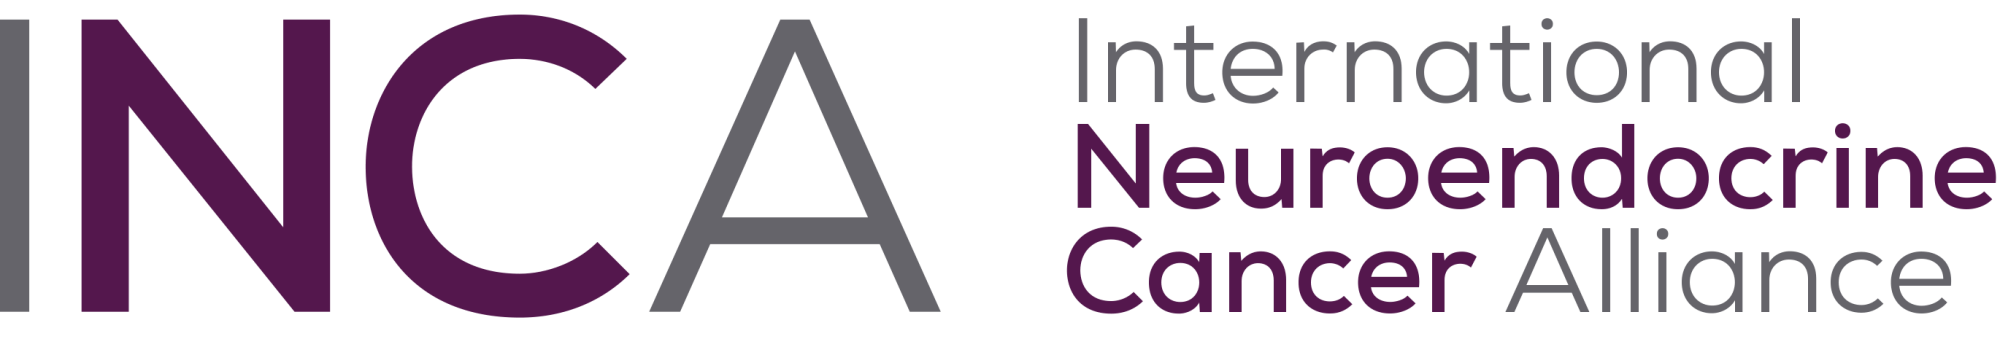 International Neuroendocrine Cancer Alliance